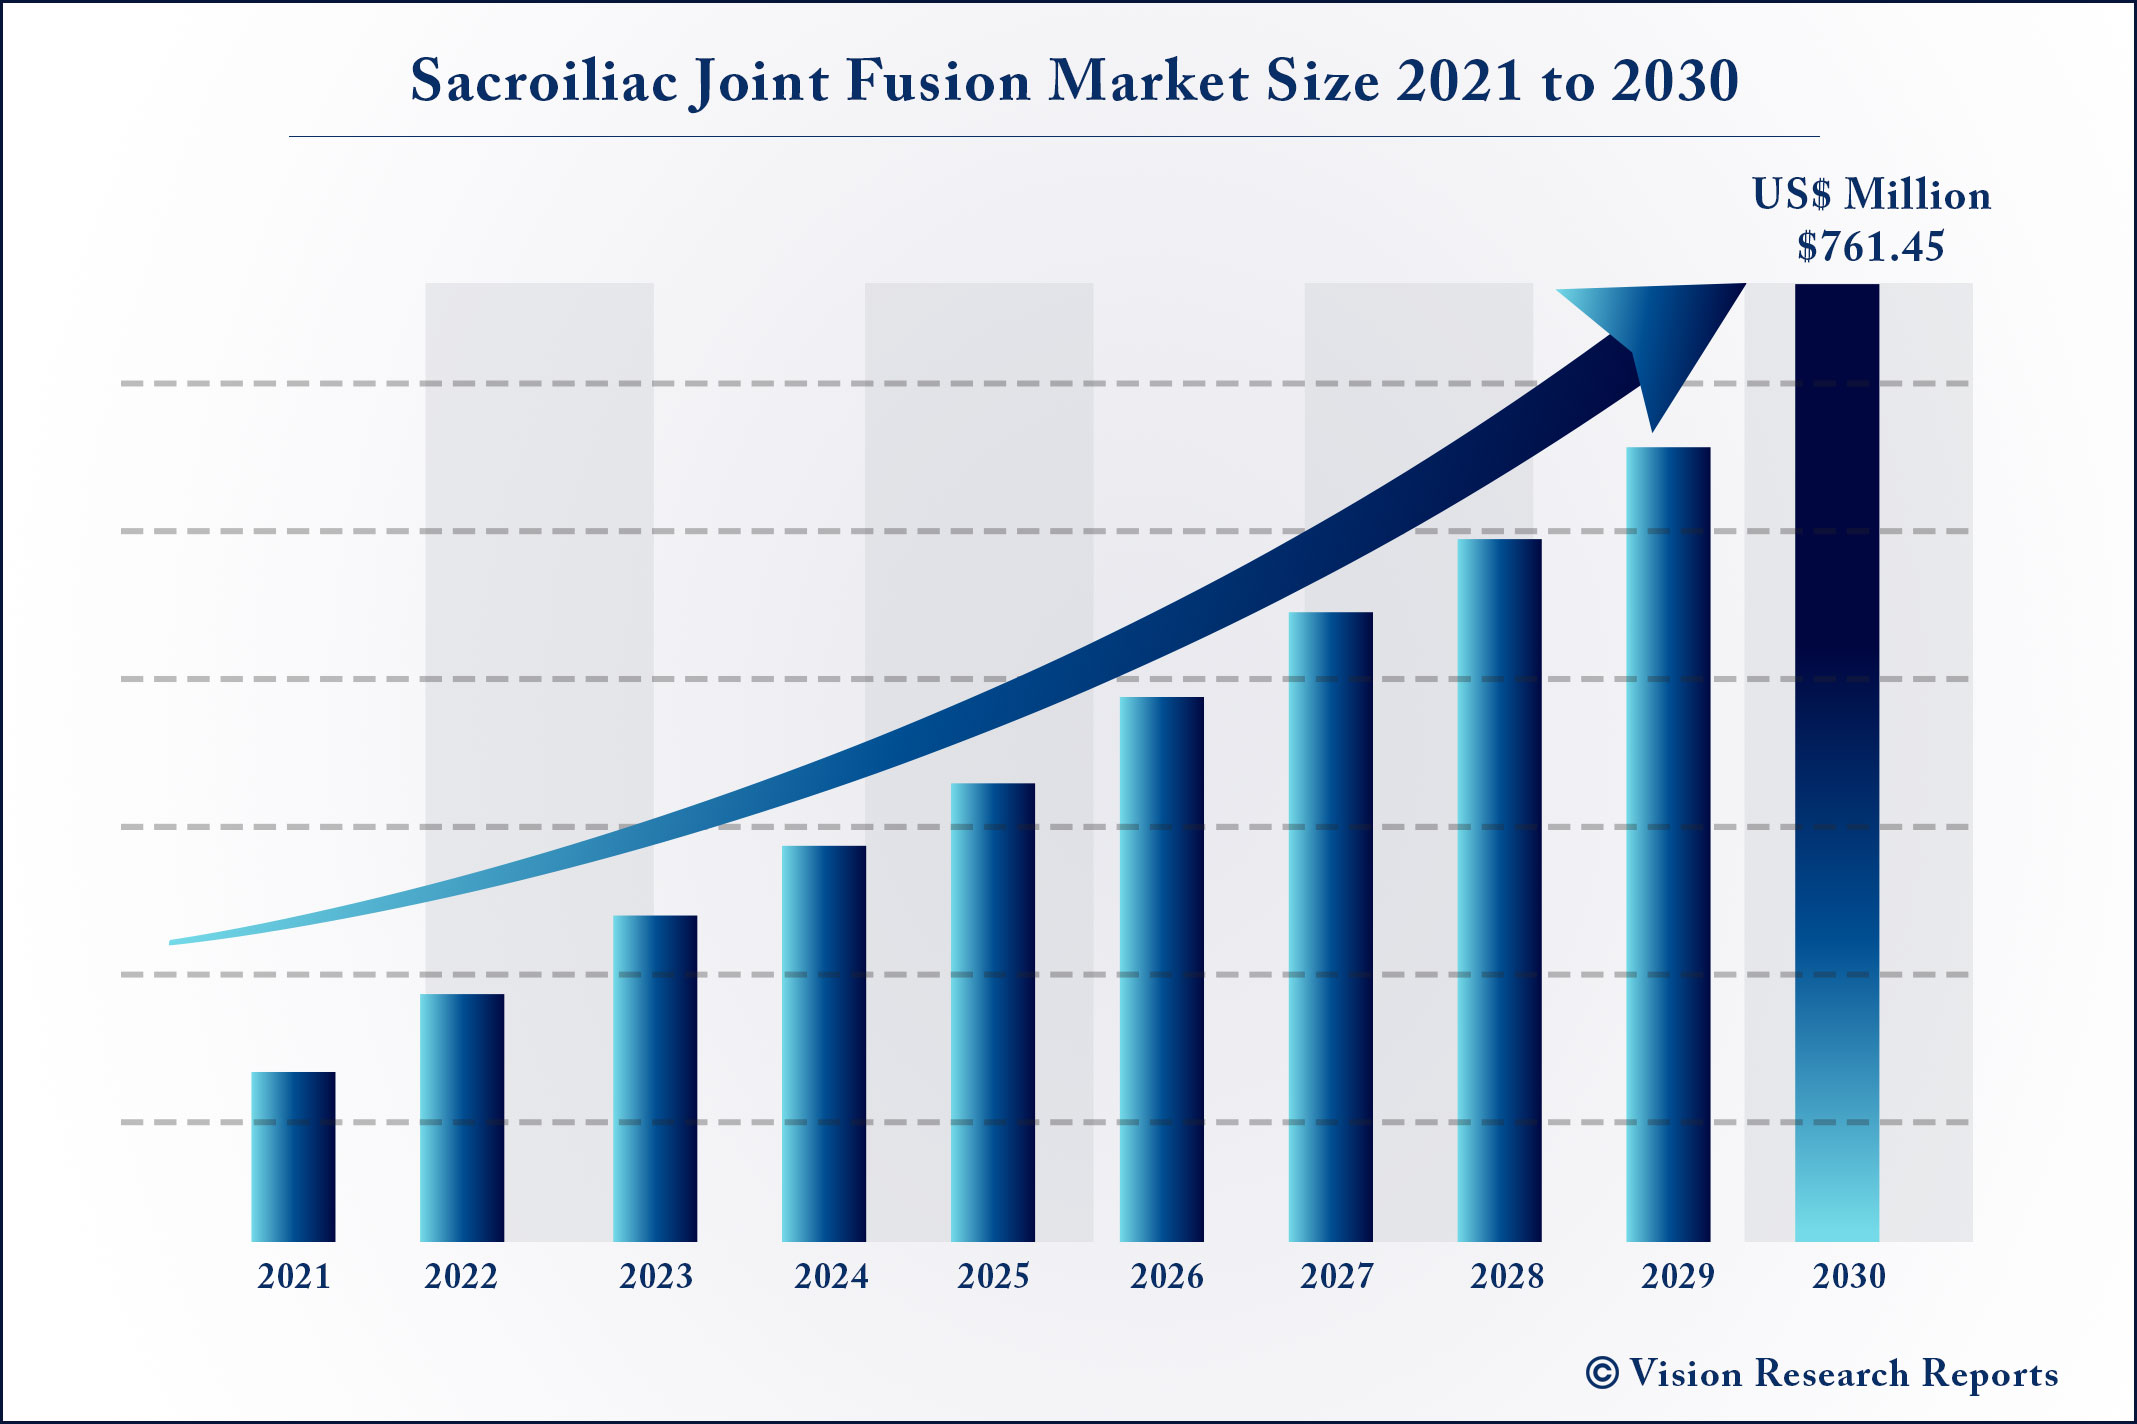 Sacroiliac Joint Fusion Market Size 2021 to 2030